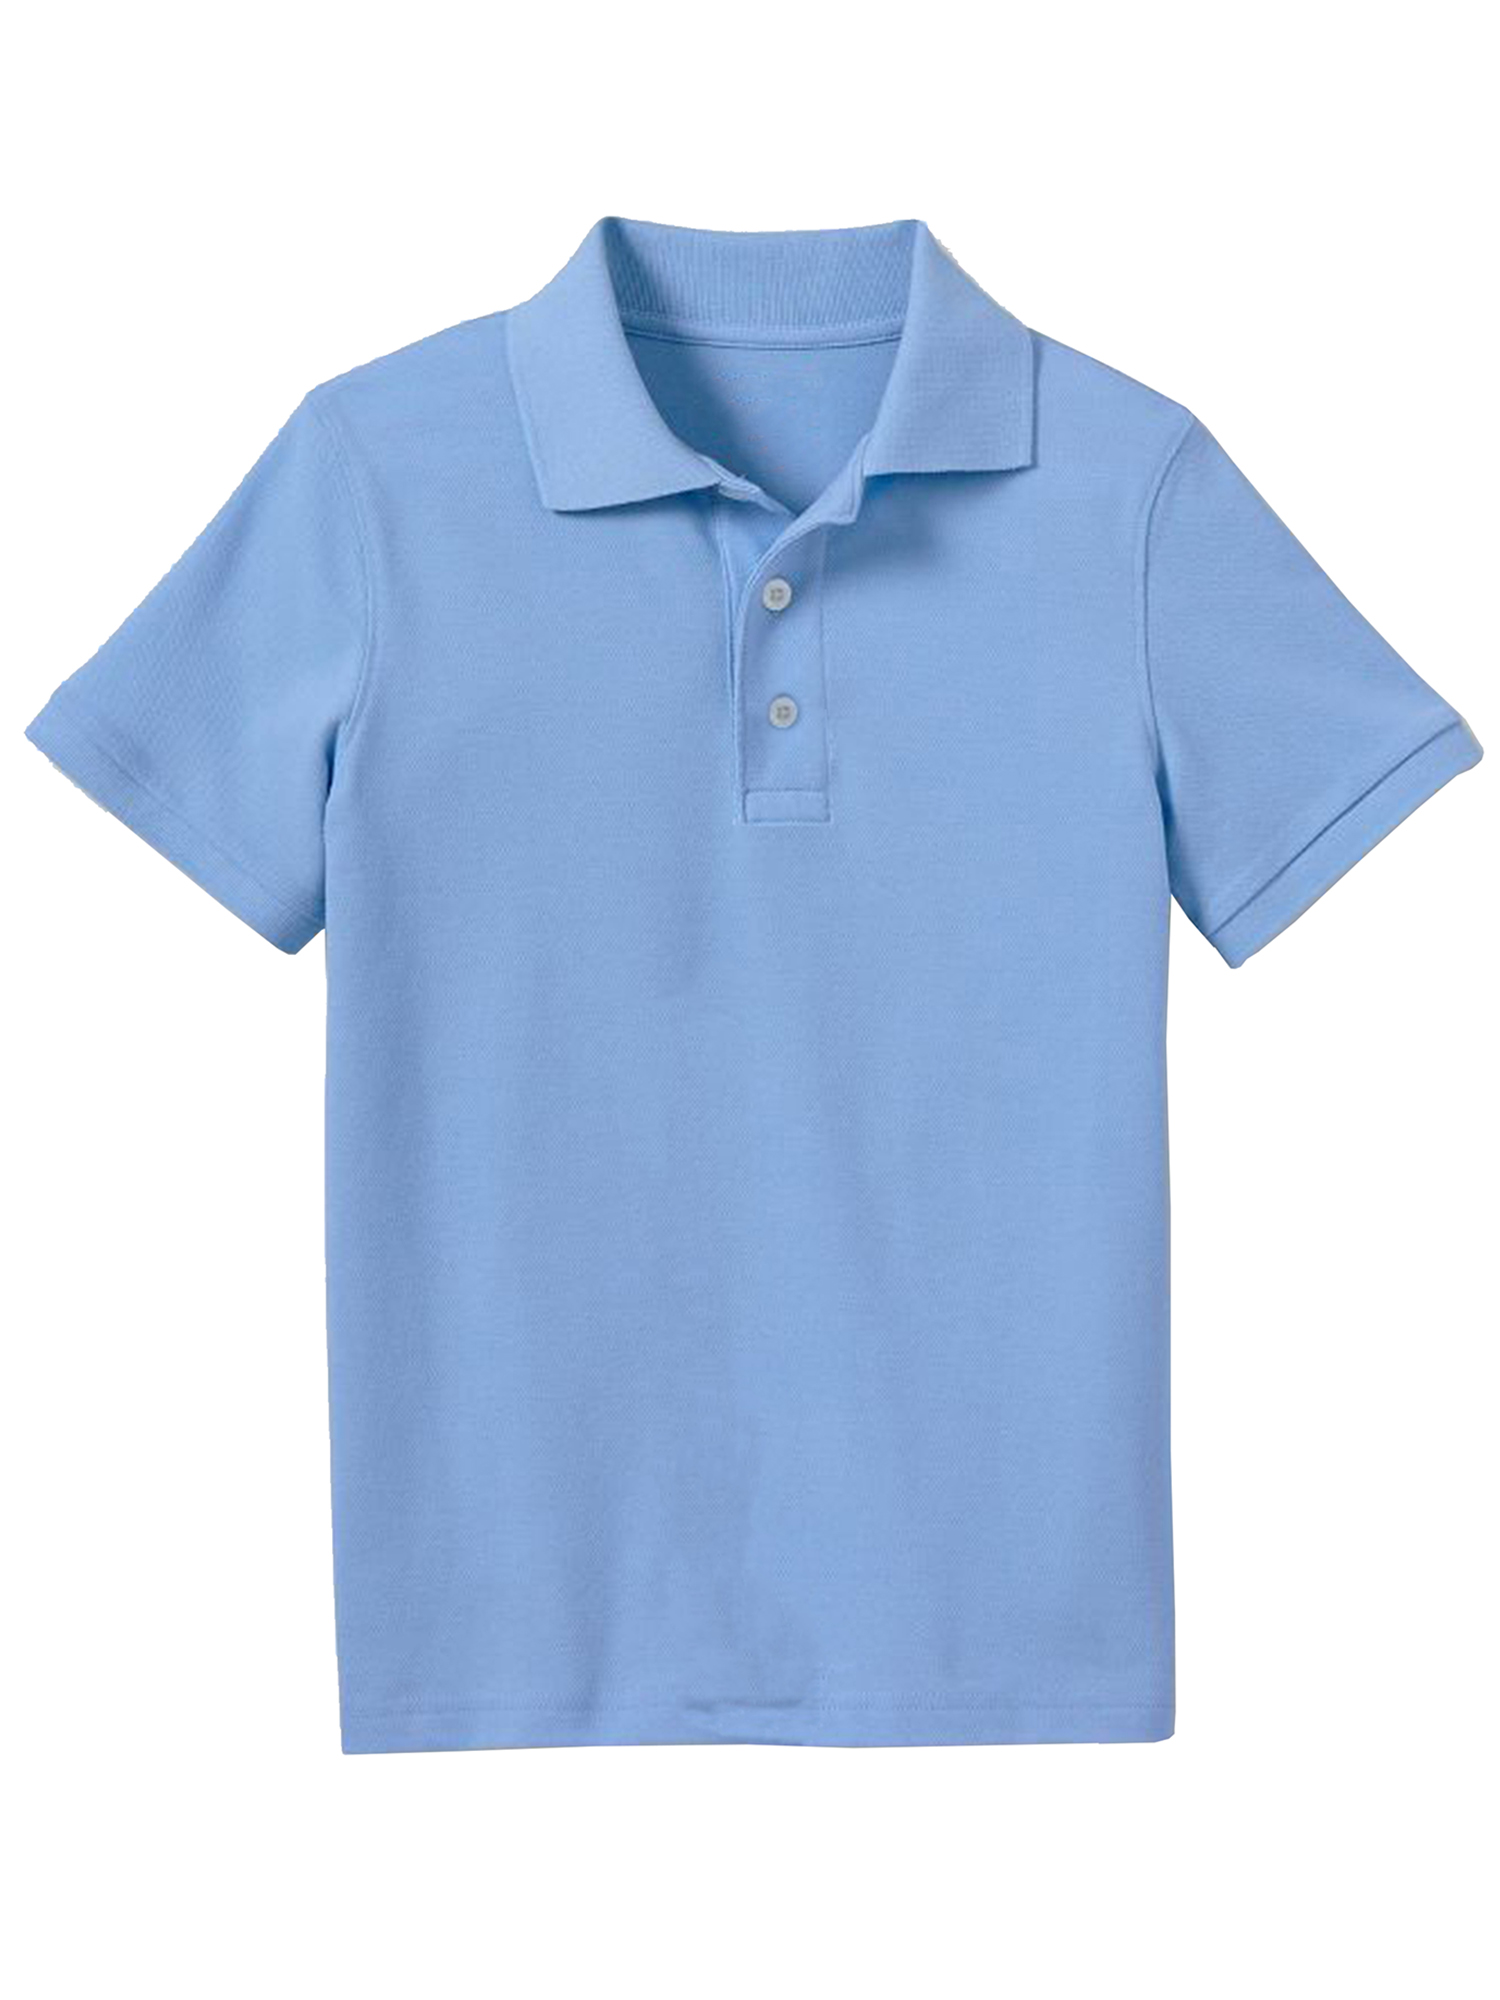 GBH Boys School Uniform Short Sleeve Pique Polo Shirt (Little Boys & Big Boys) - image 1 of 2